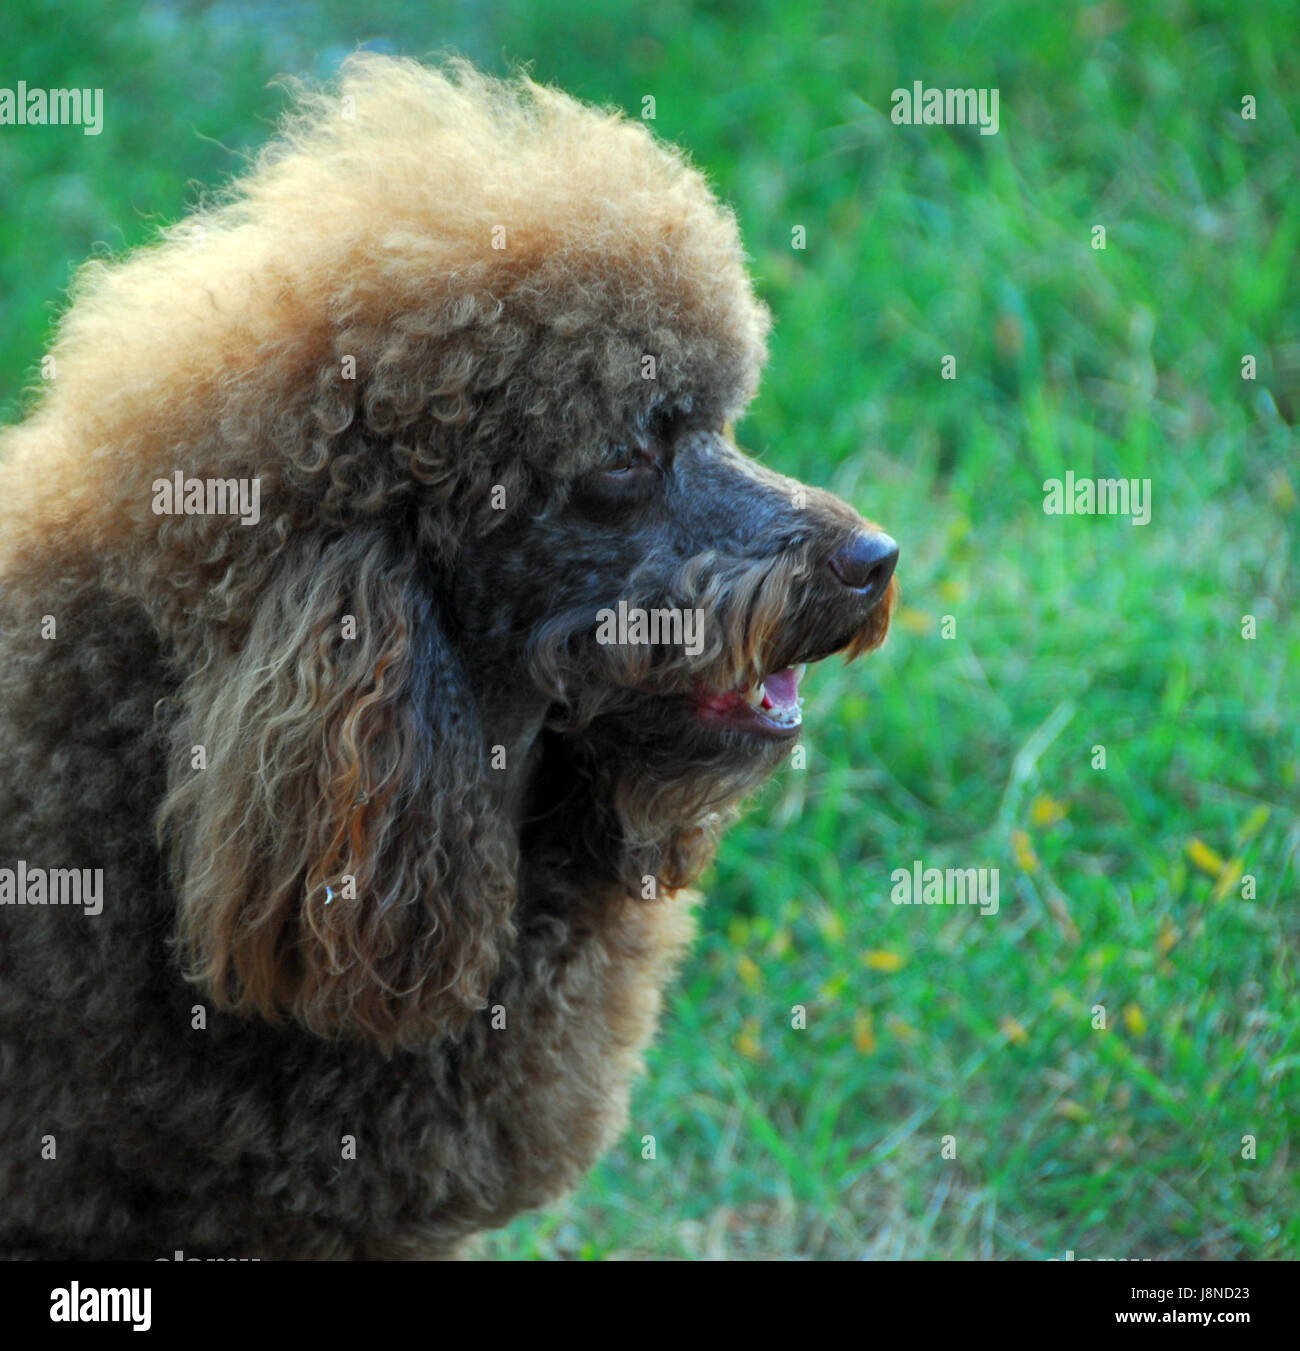 dog portrait Stock Photo